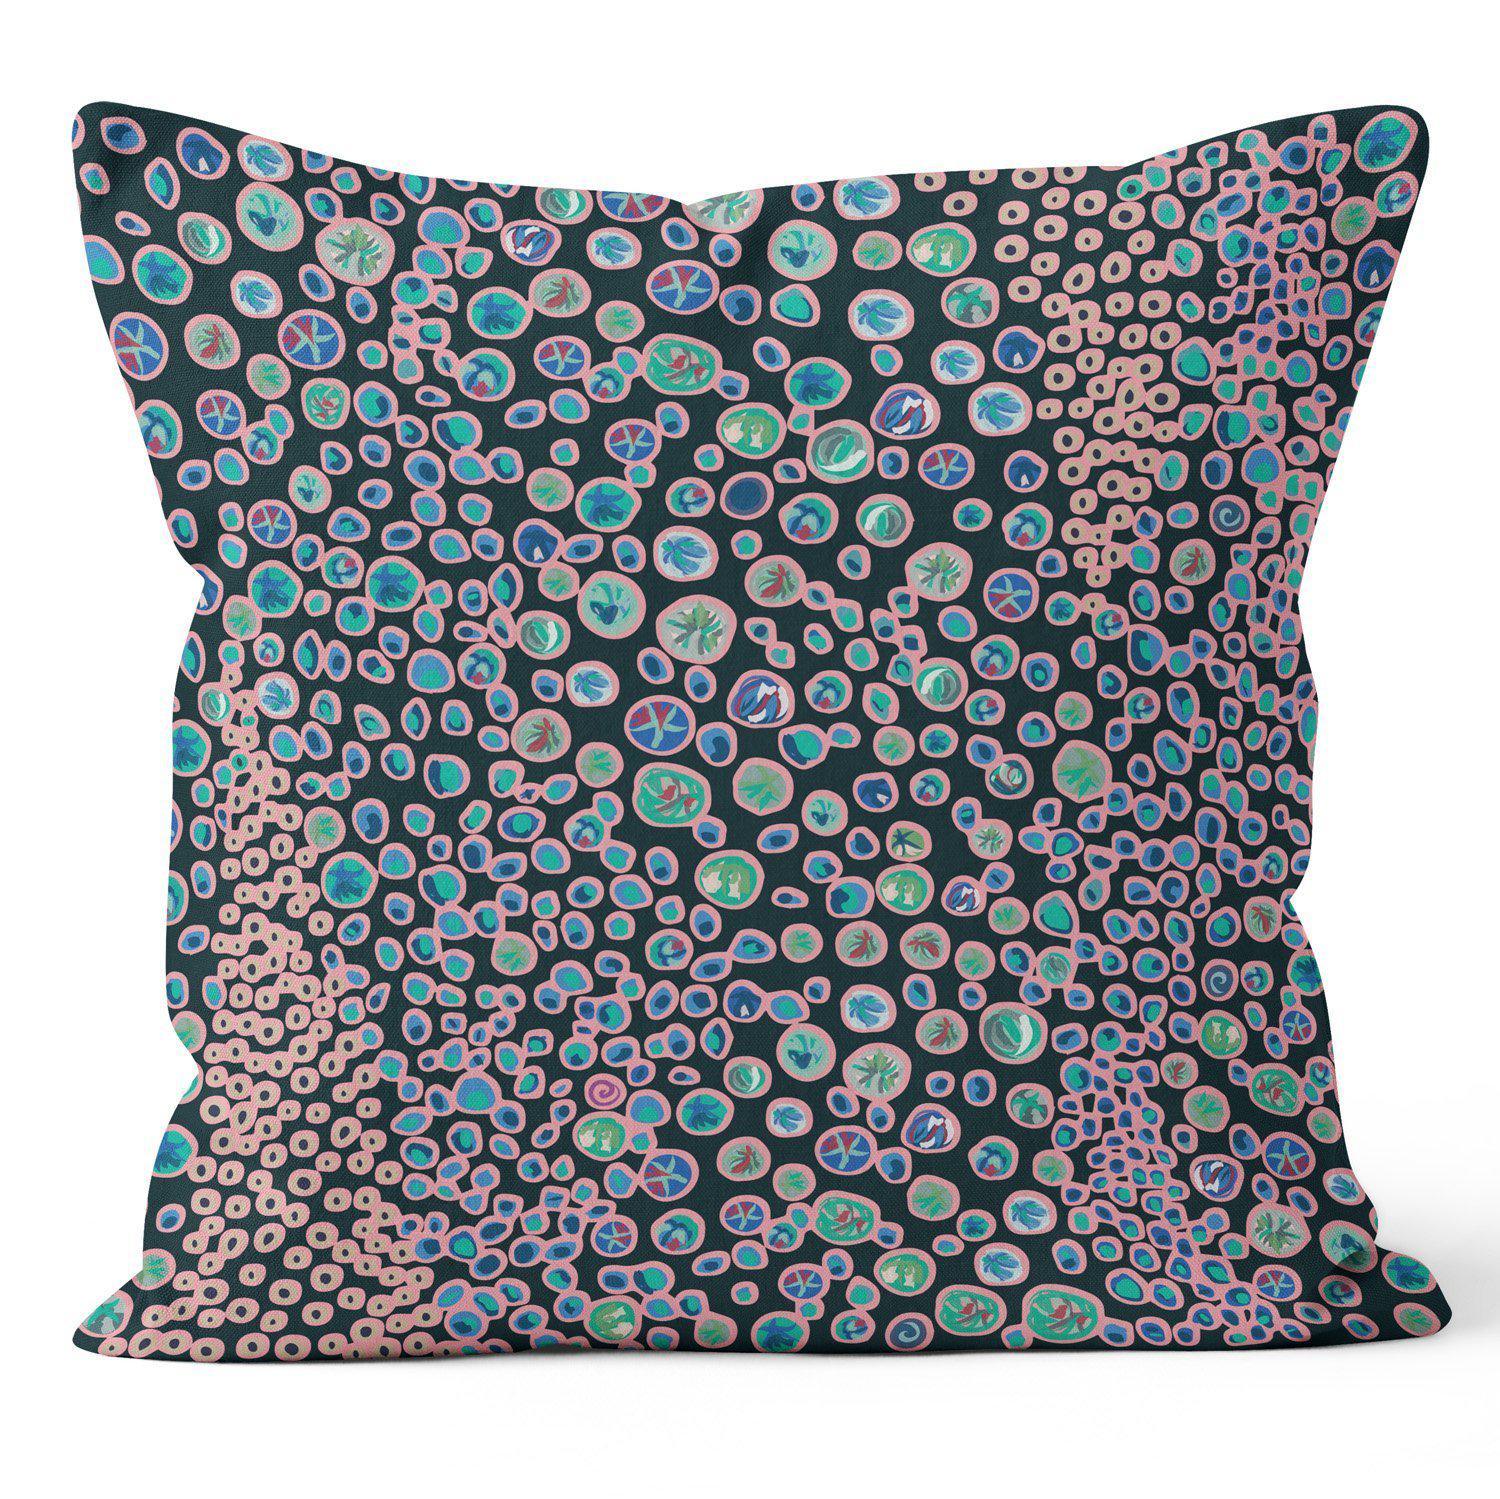 Bubbles (Purple) - Funky Art Cushion - Bellissima - House Of Turnowsky Pillows - Handmade Cushions UK - WeLoveCushions